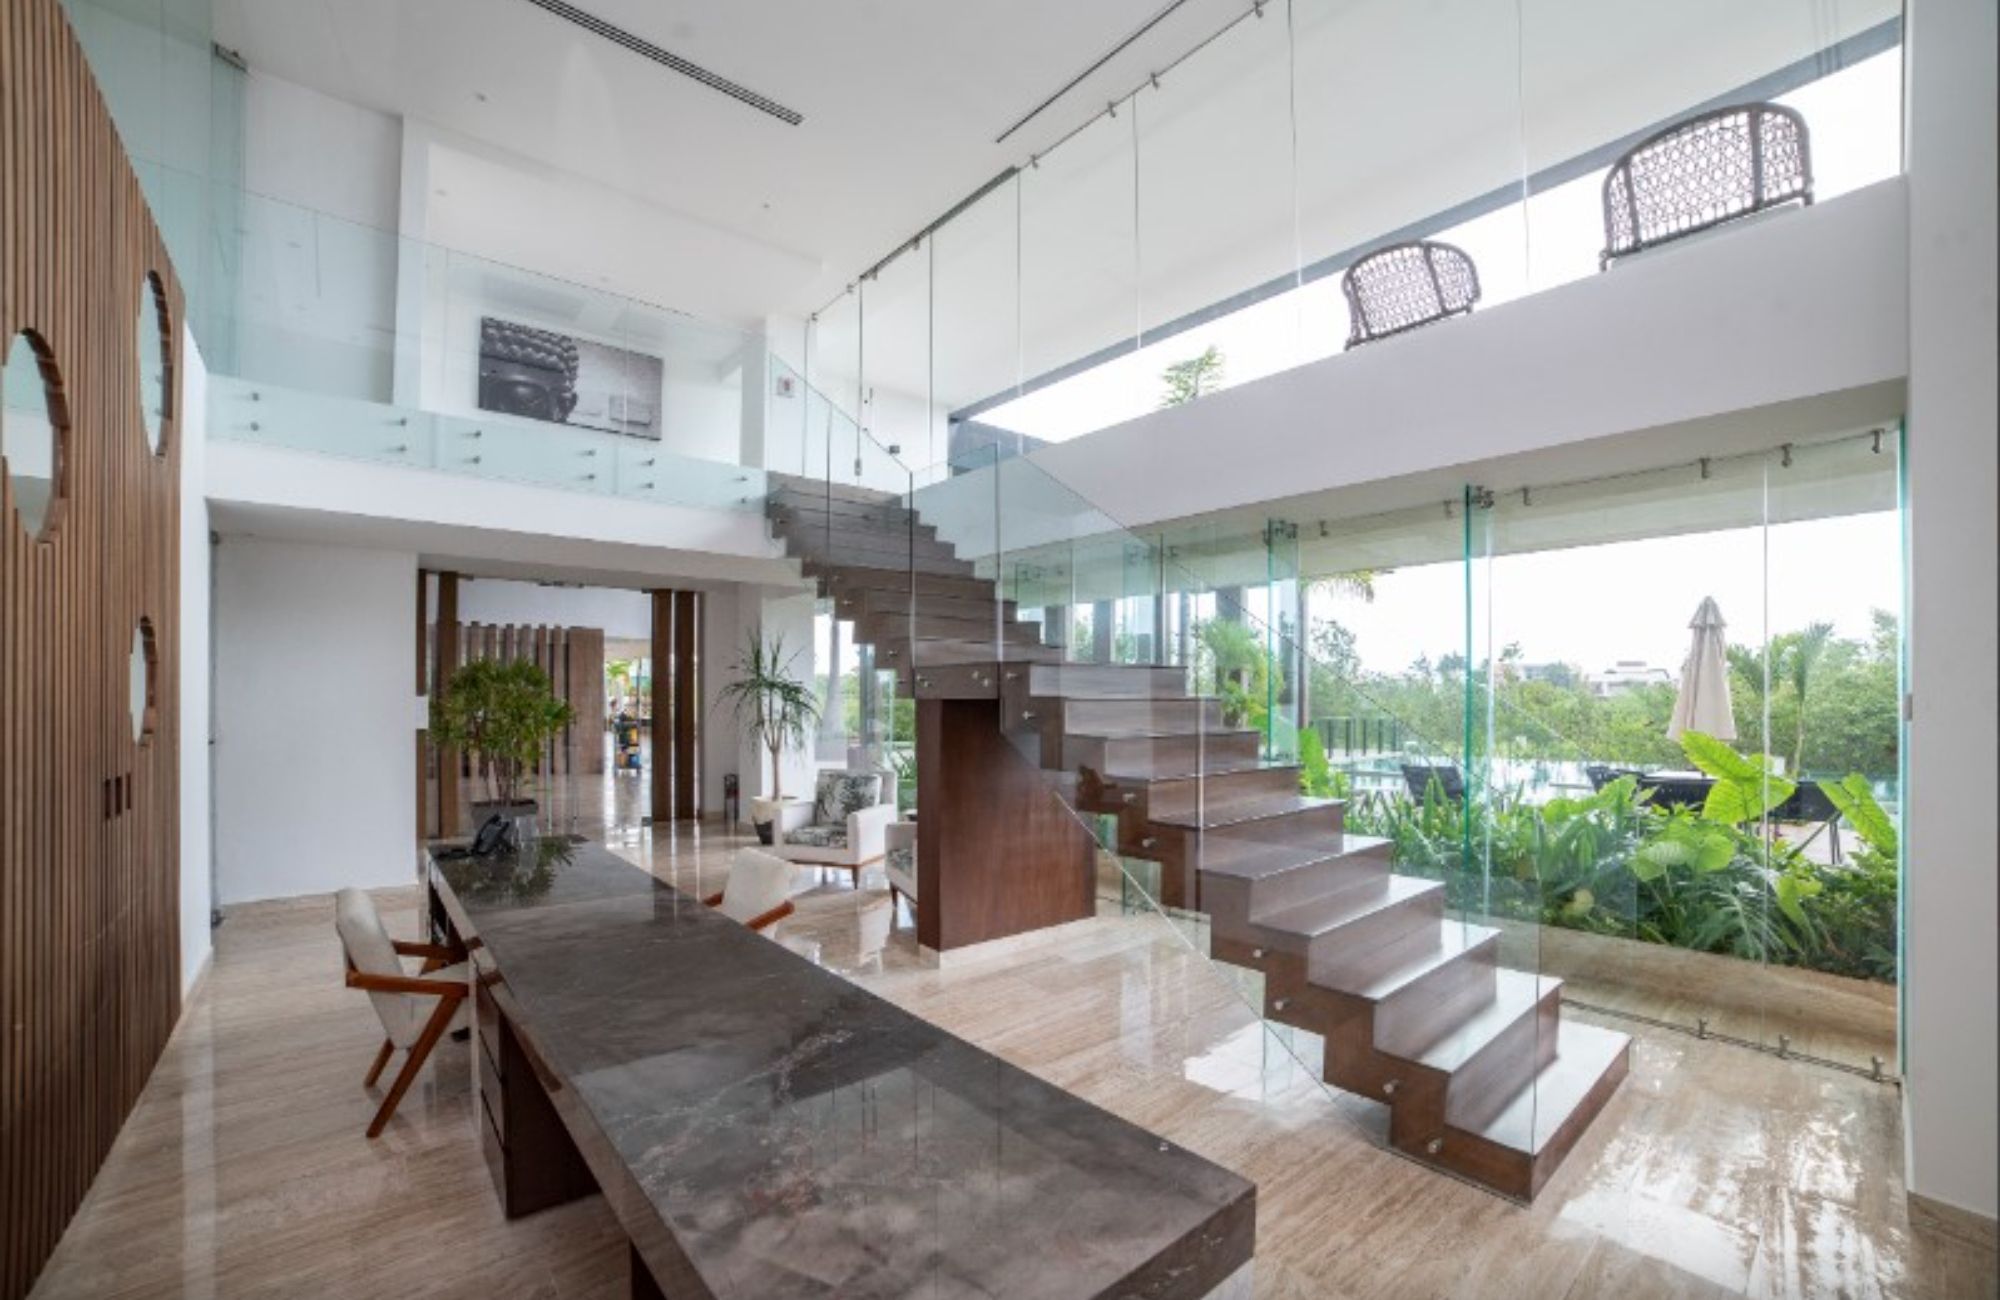 Beachfront apartment with beach club, ocean view terrace, pre-construction, for sale, Cancun